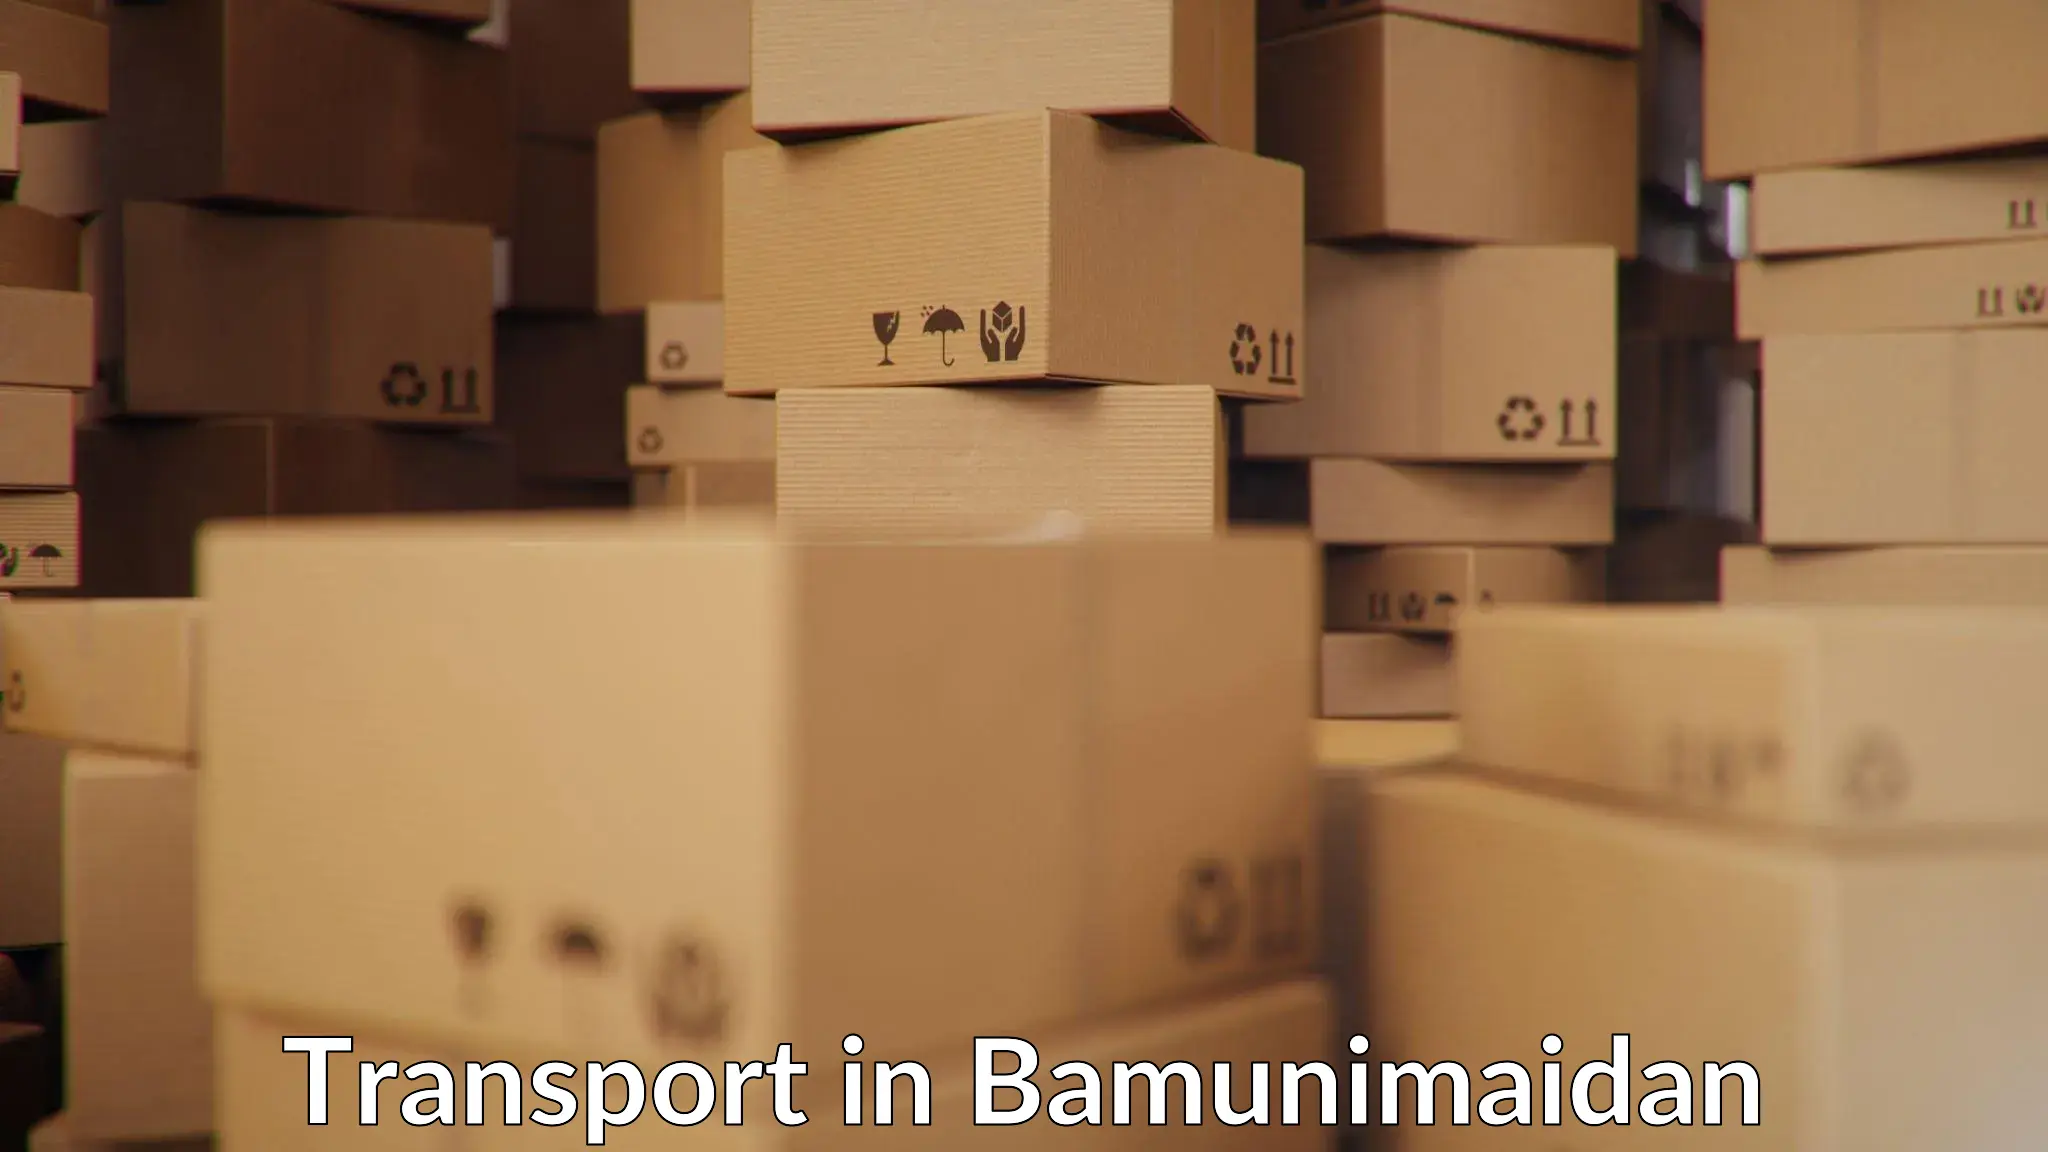 Furniture transport service in Bamunimaidan